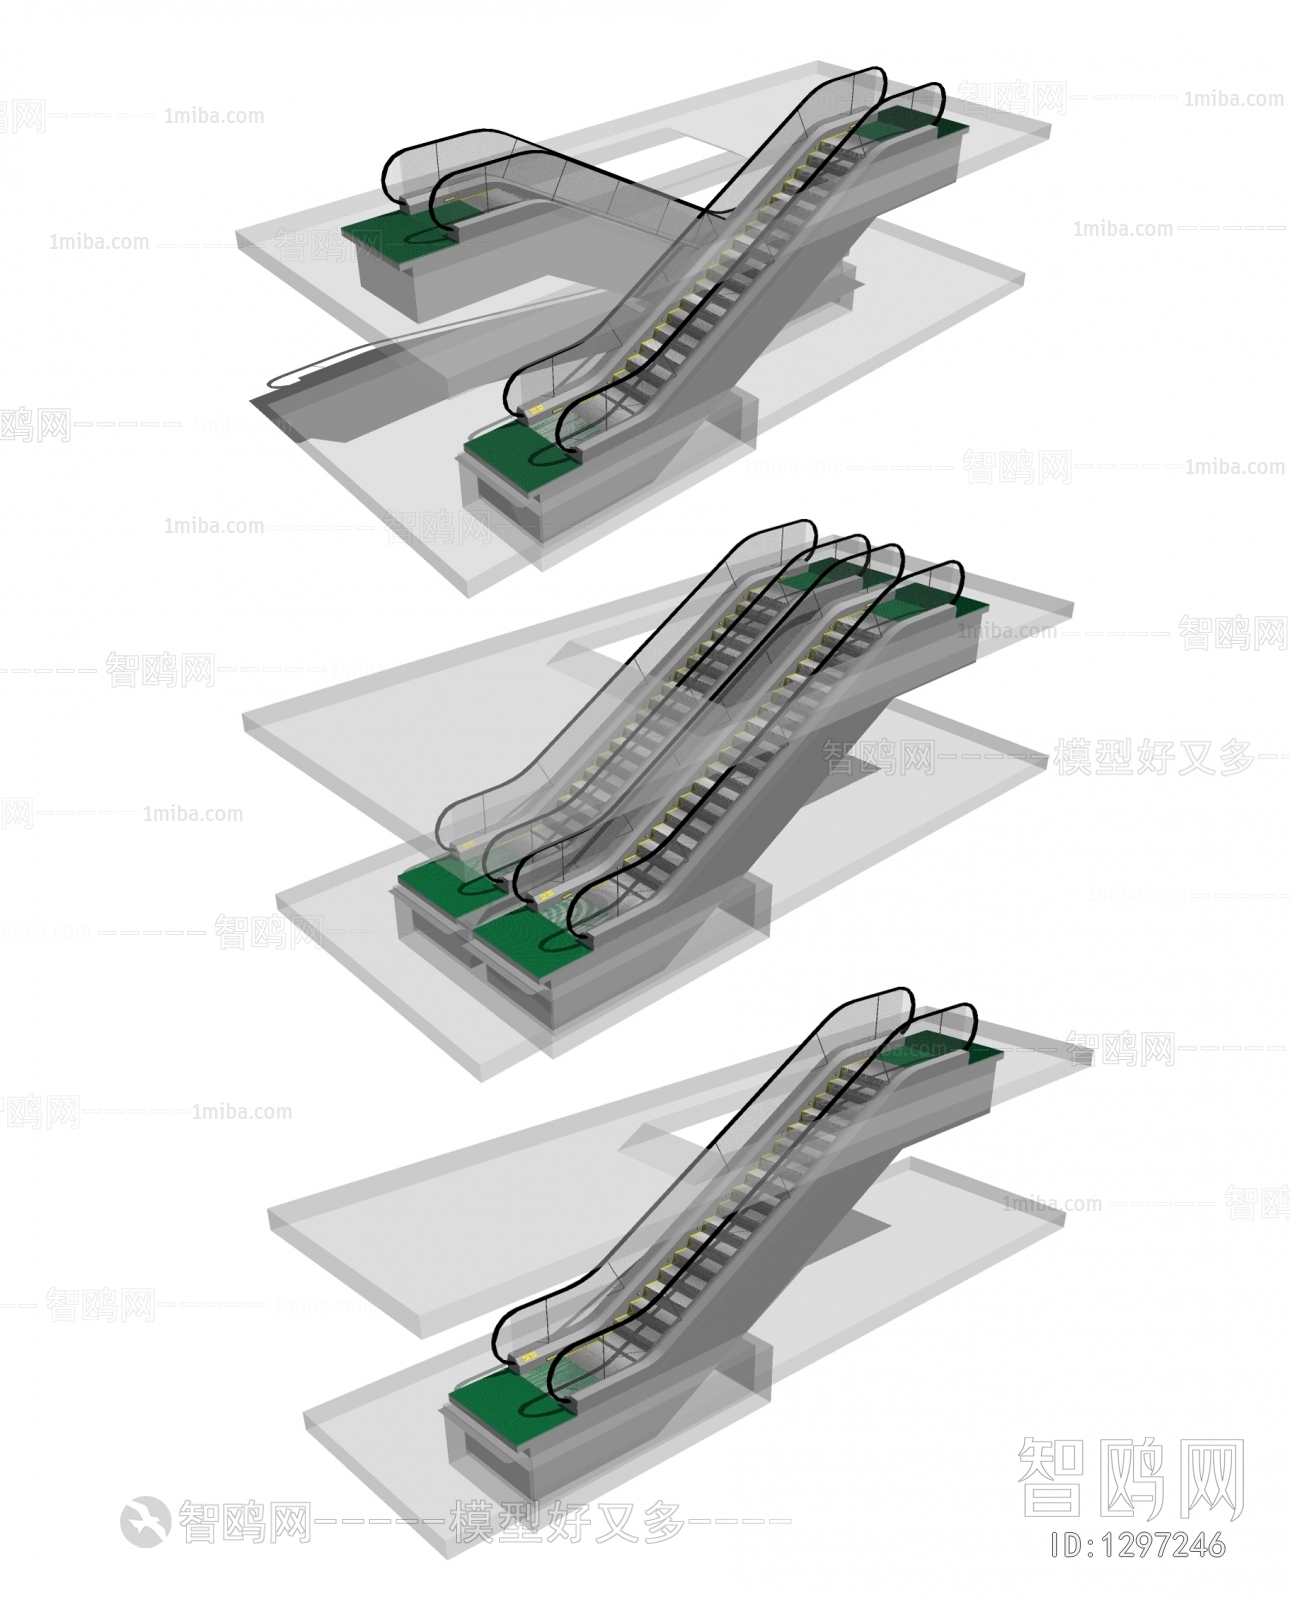 Modern Escalator Sketchup Model Download Model Id890590914 1miba 1245